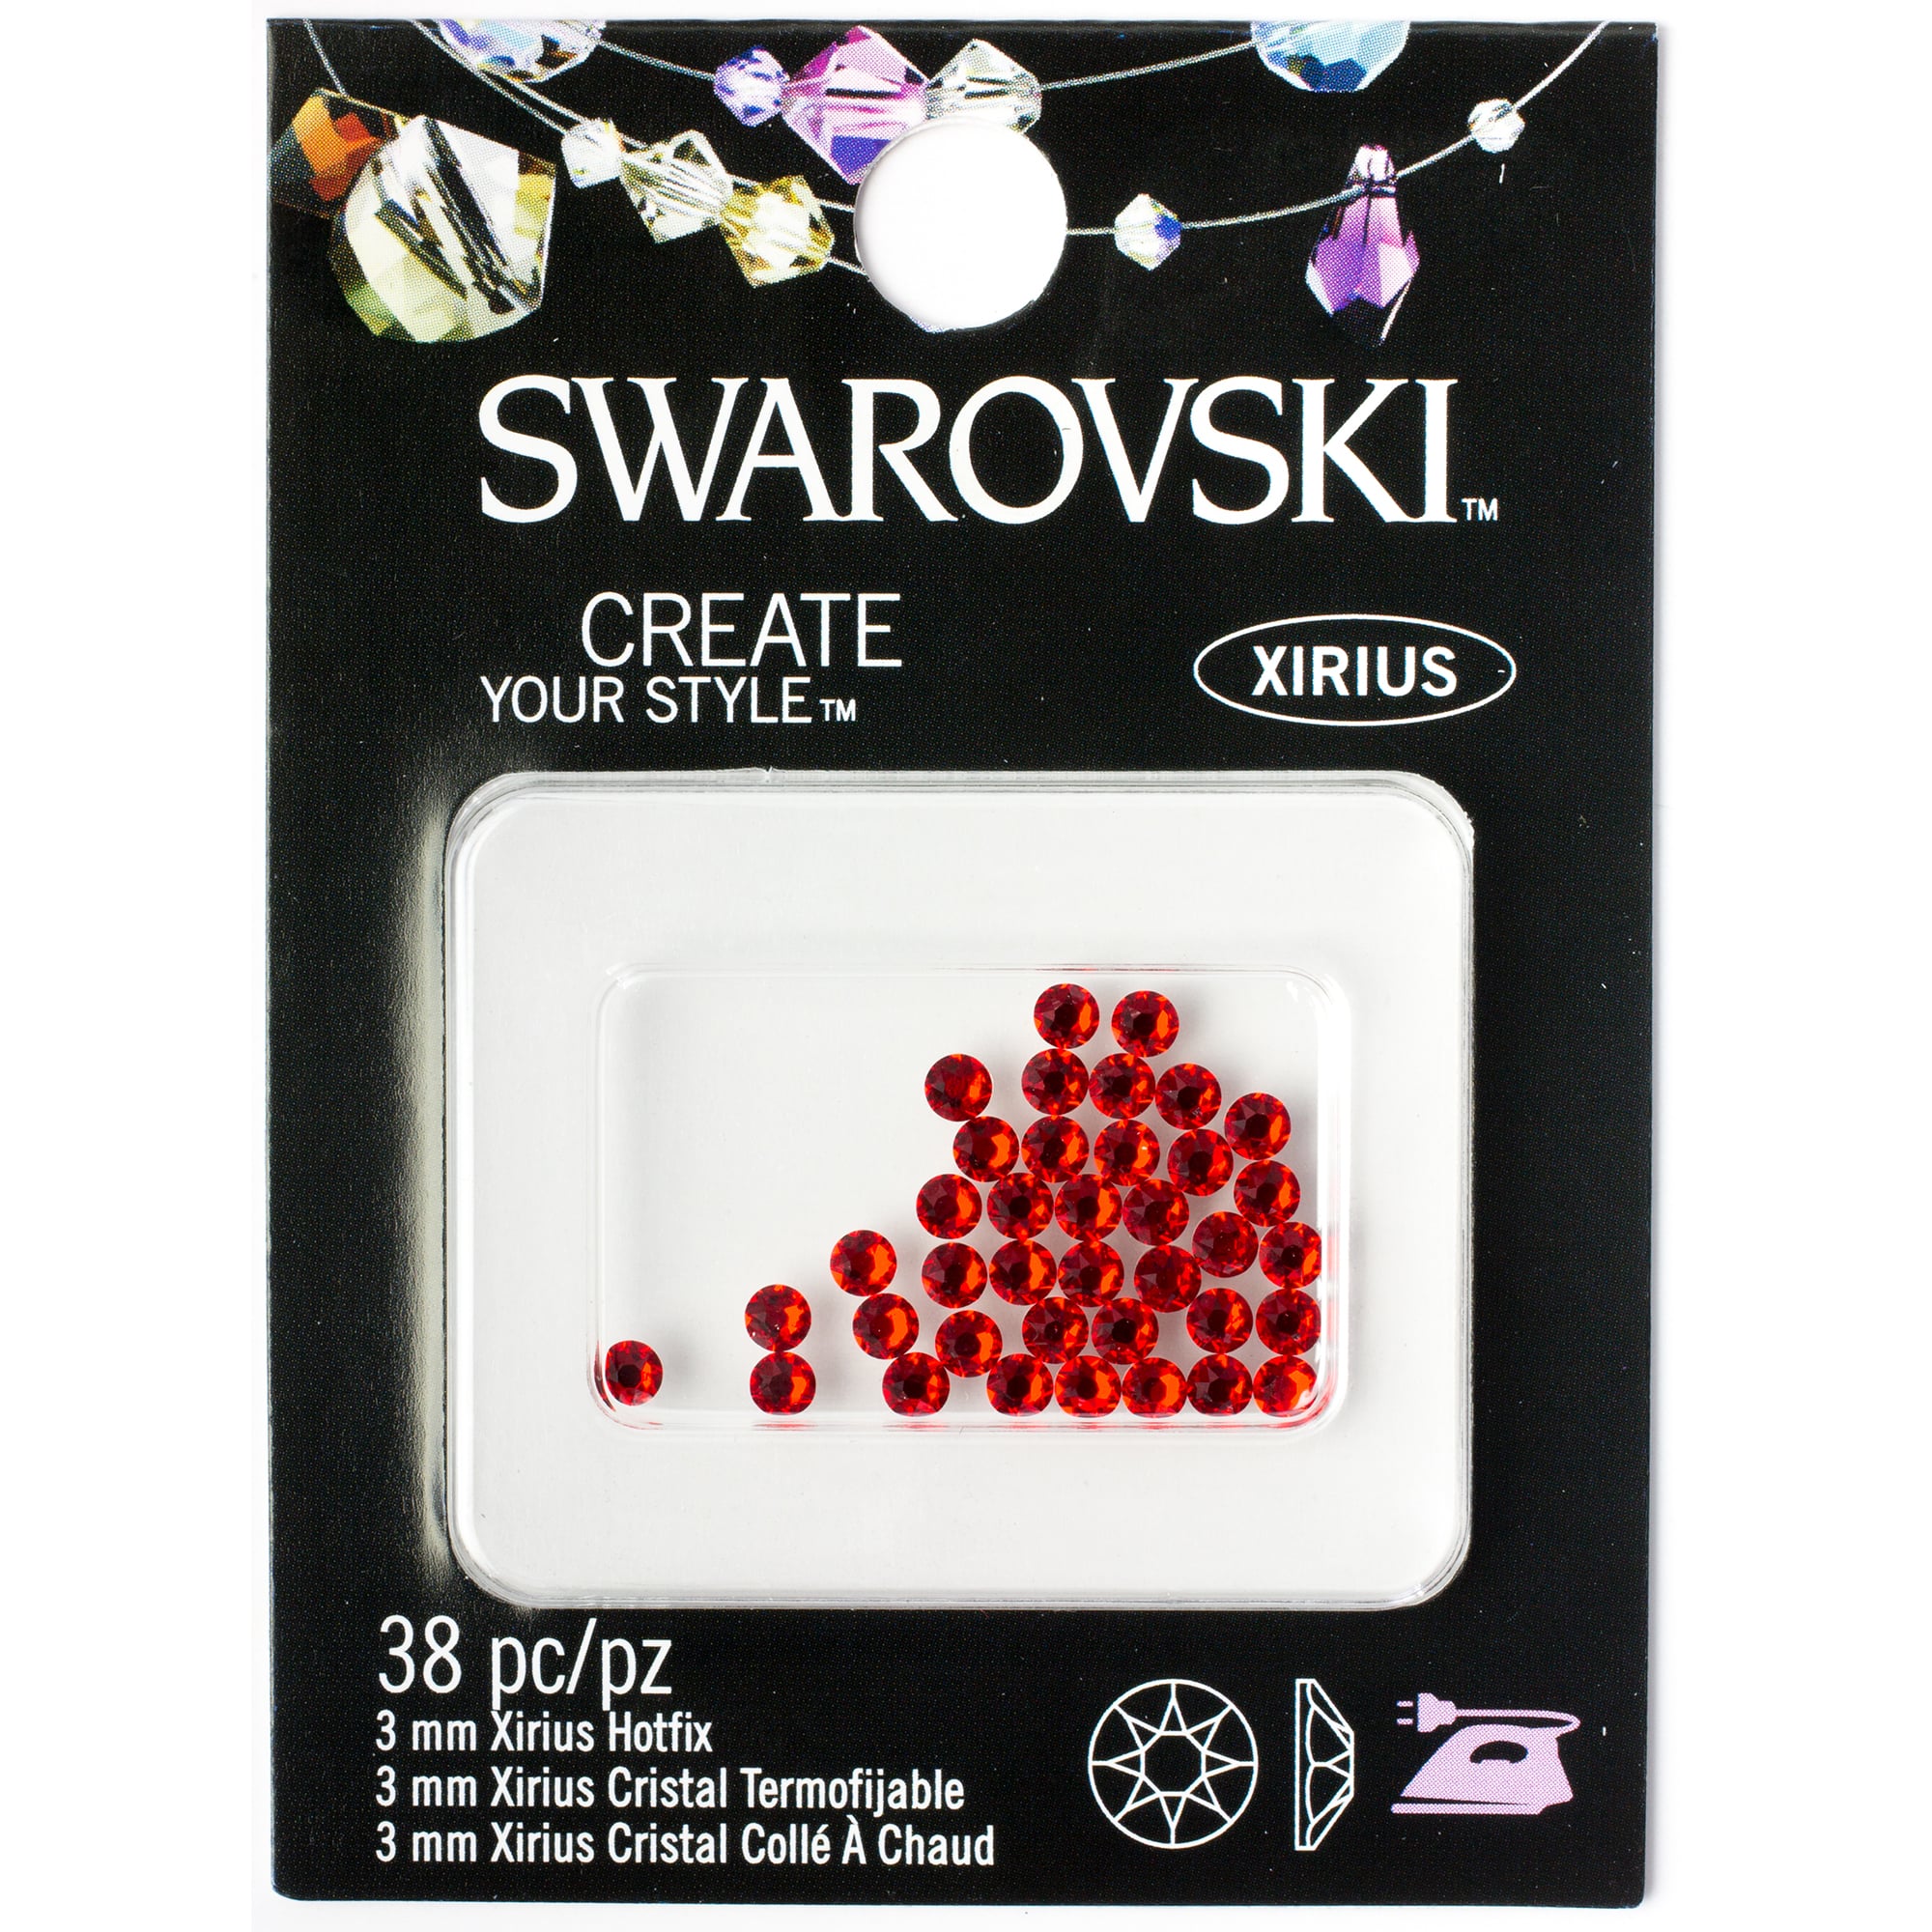 Swarovski™ Create Your Style™ Hotfix Crystals, 3mm